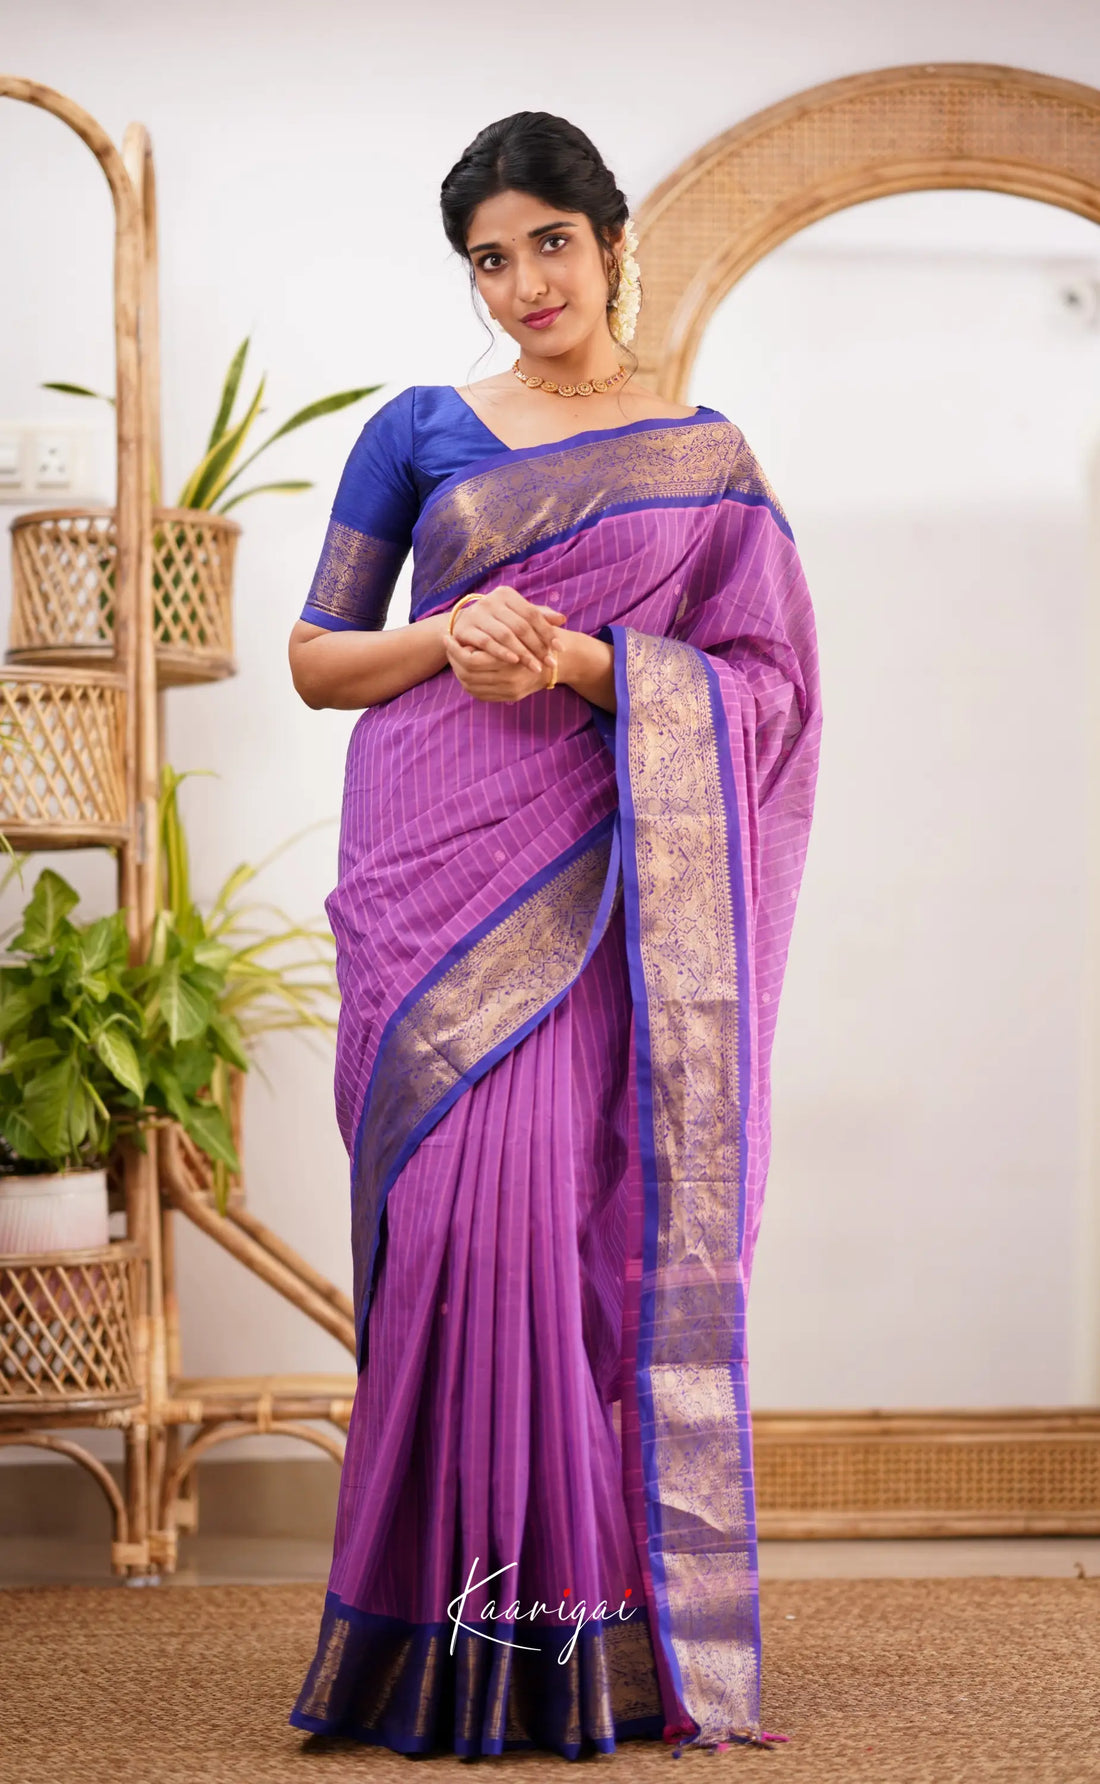 Kamakshi Purple Shade And Bright Blue Tone Sarees